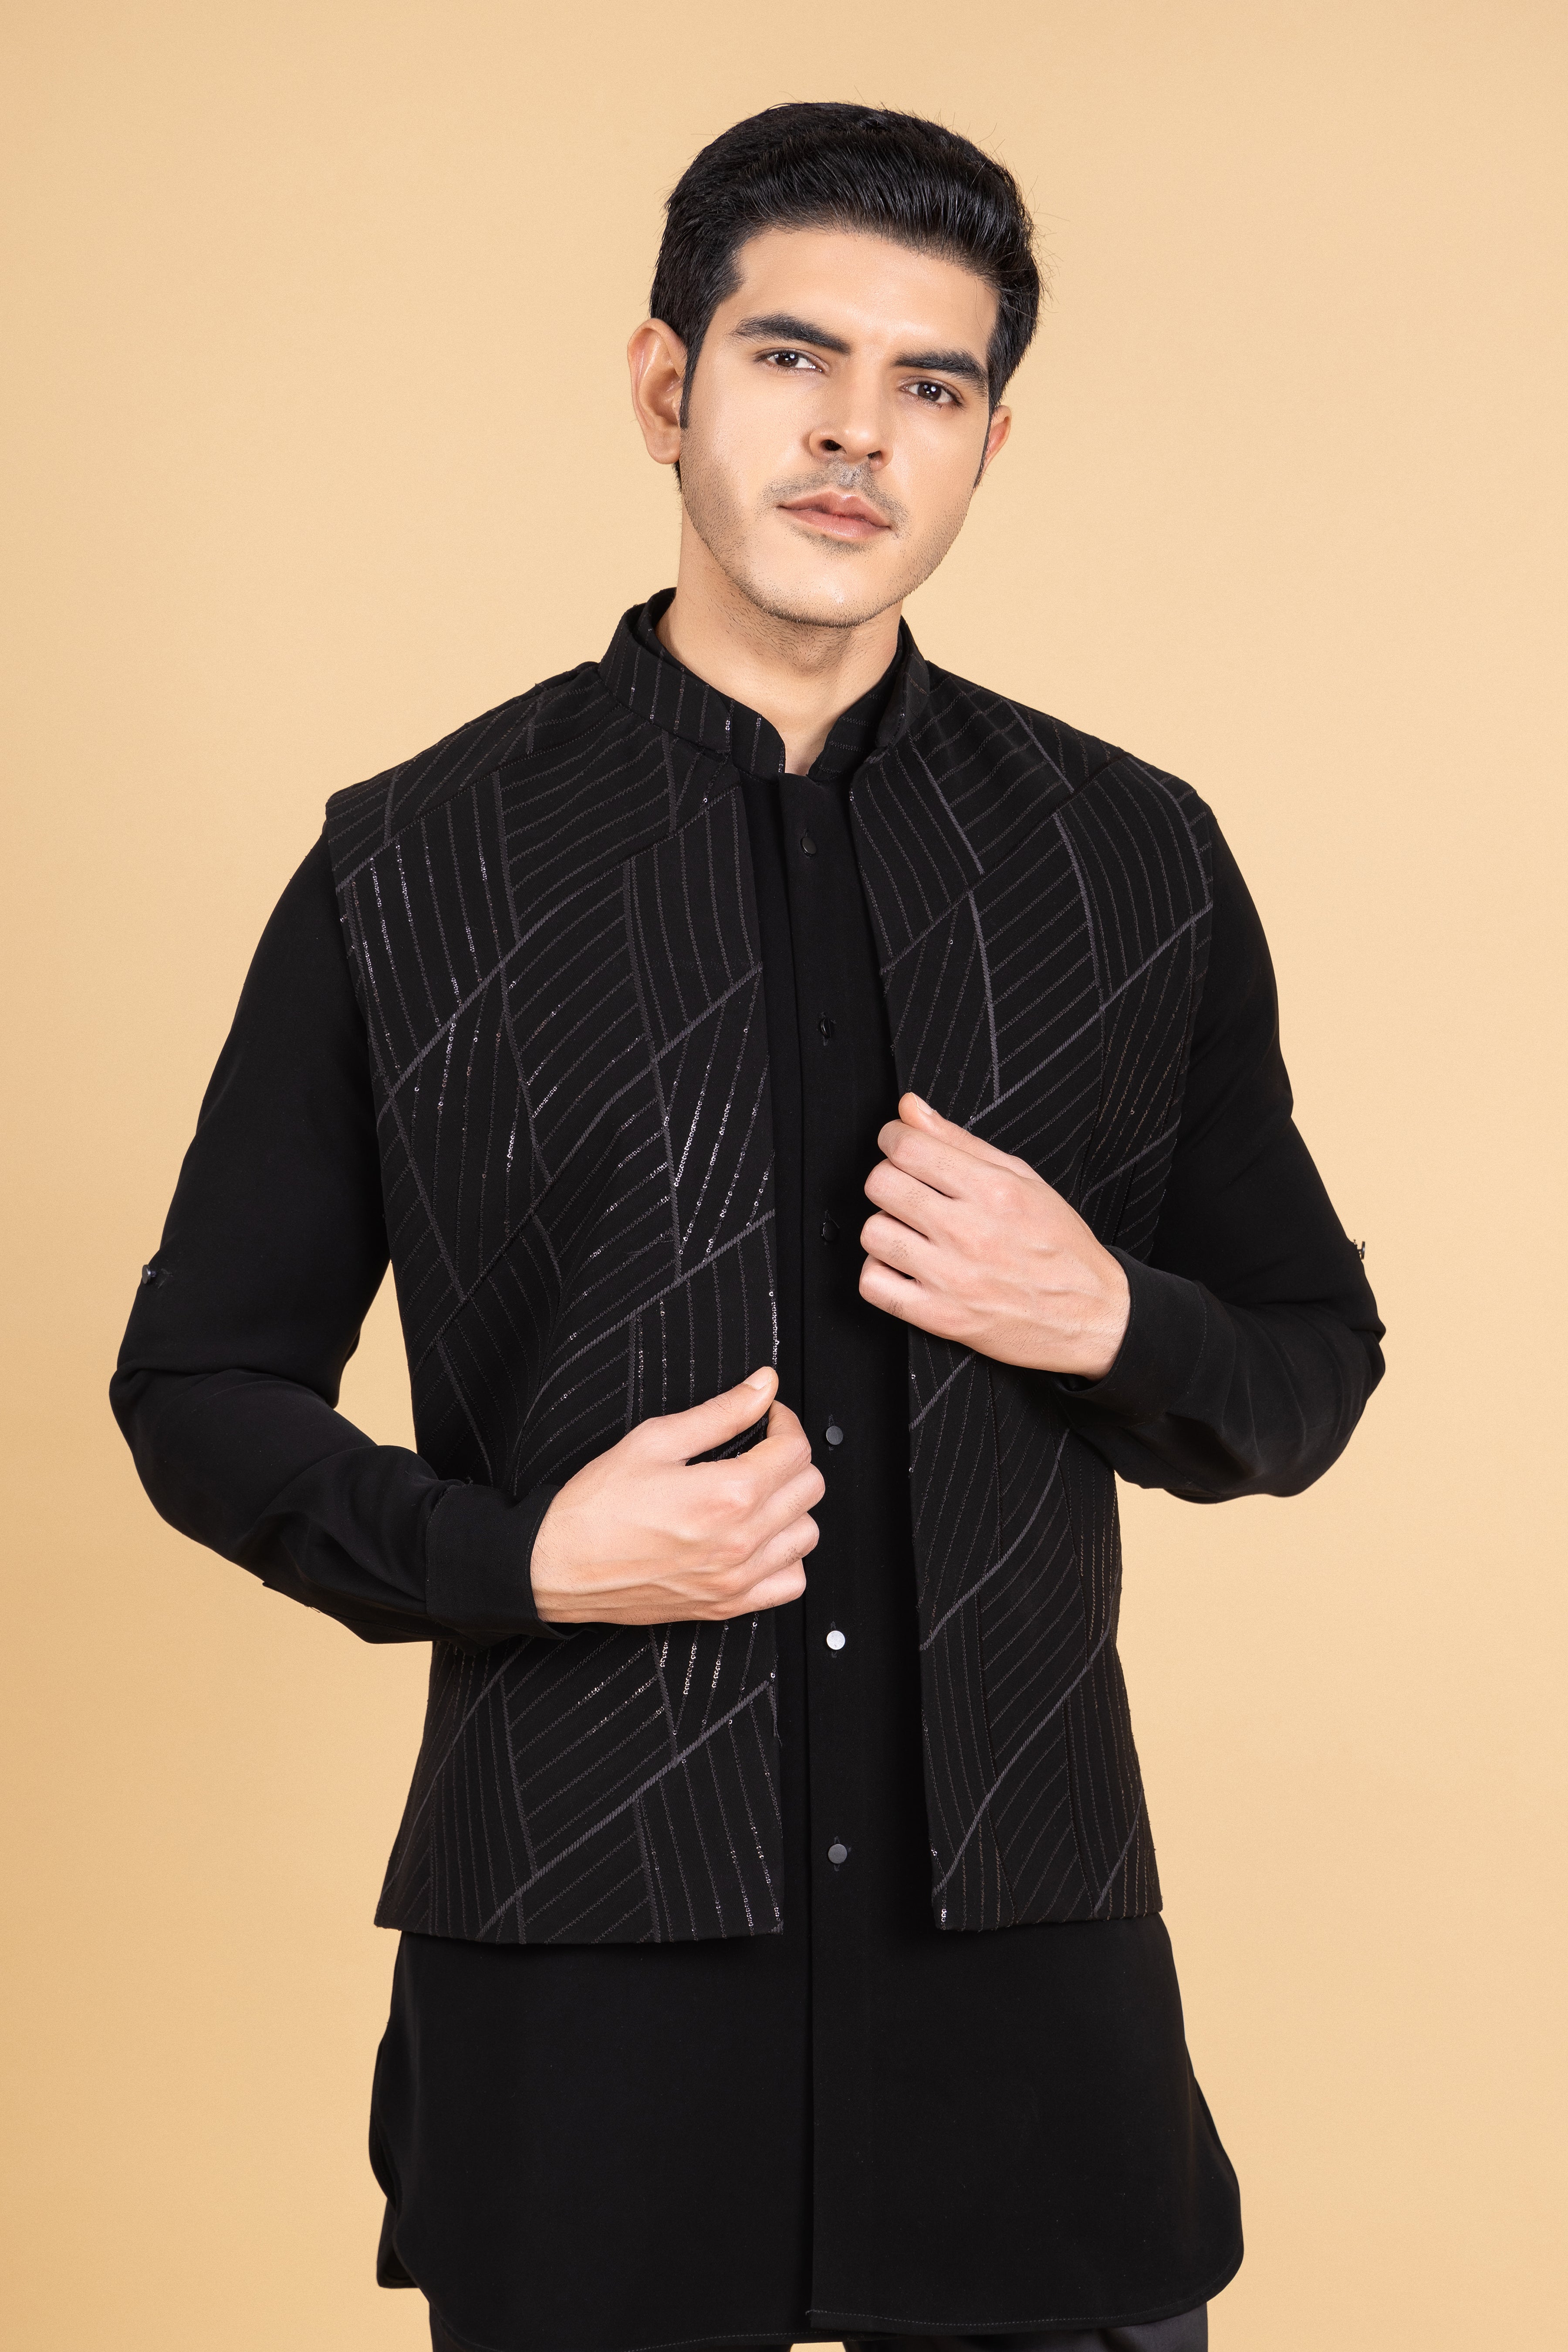 ASOS DESIGN skinny suit jacket in sequin diamond velvet in black | ASOS